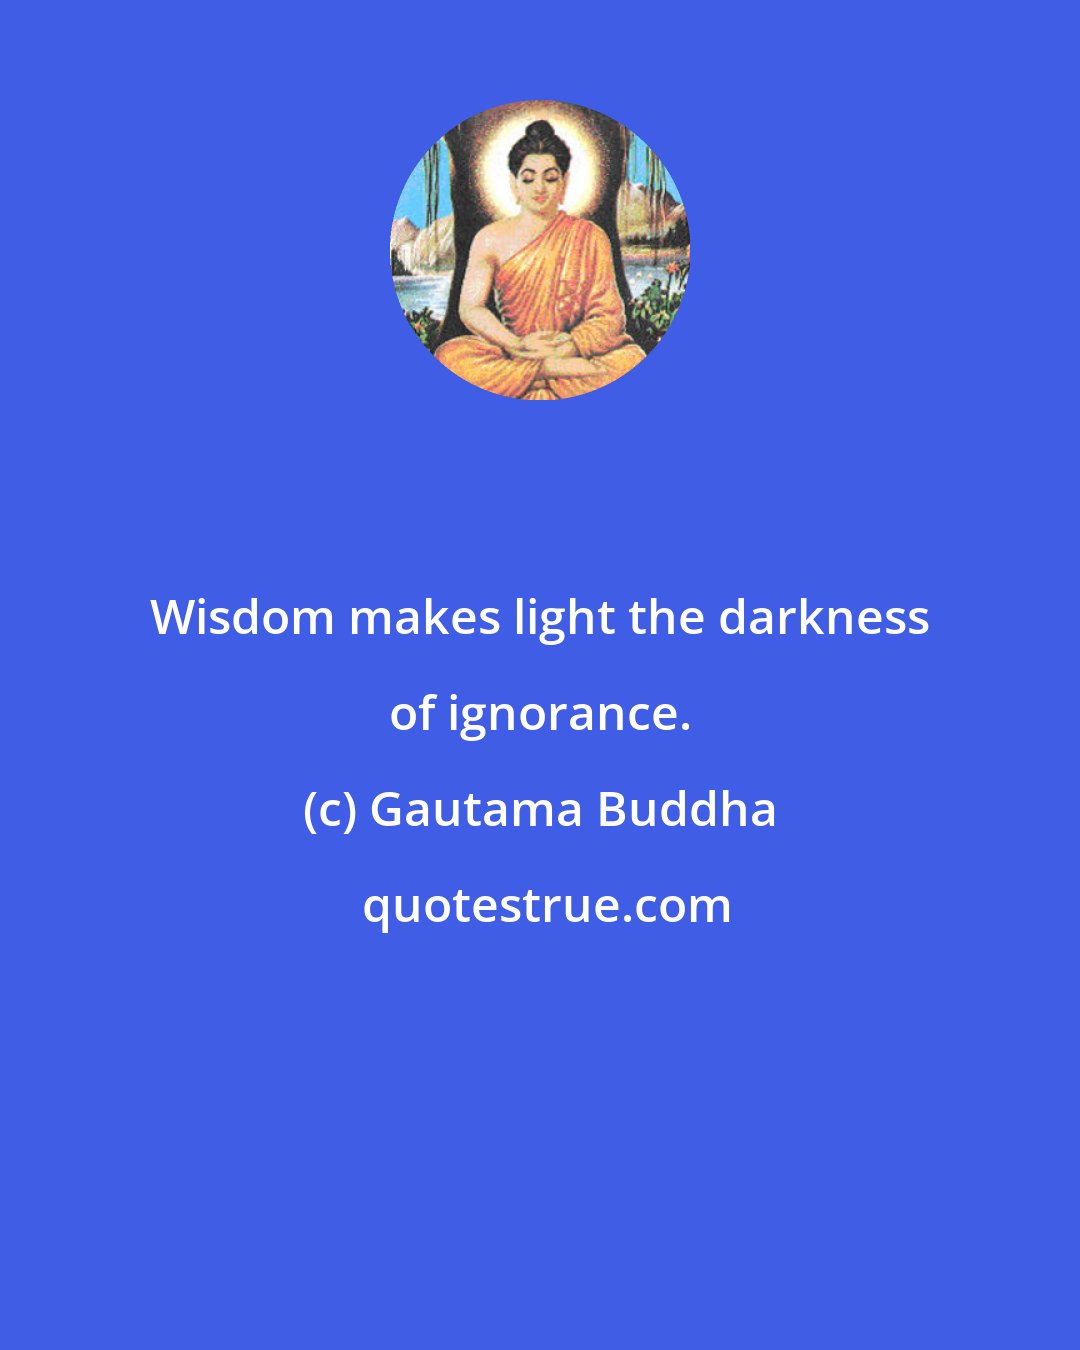 Gautama Buddha: Wisdom makes light the darkness of ignorance.